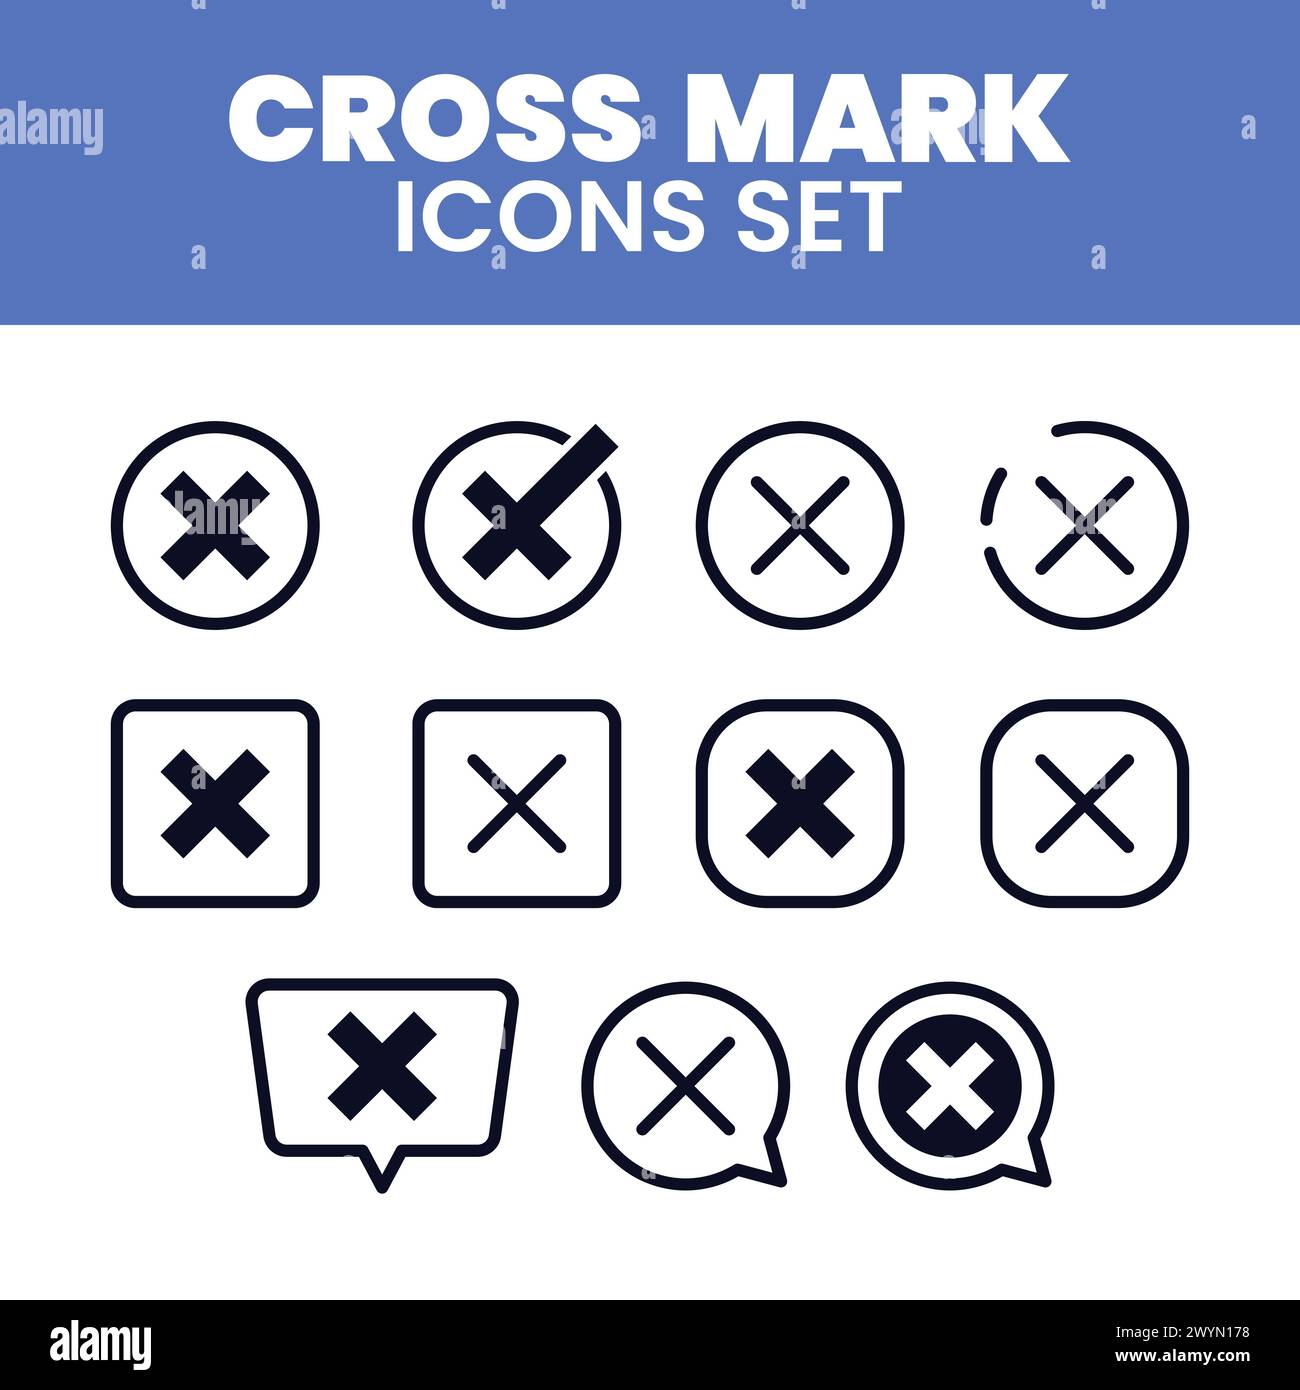 Red Cross Mark Icons Set Illustration Wrong Cross Mark Vector Sets Cross Stock Vector